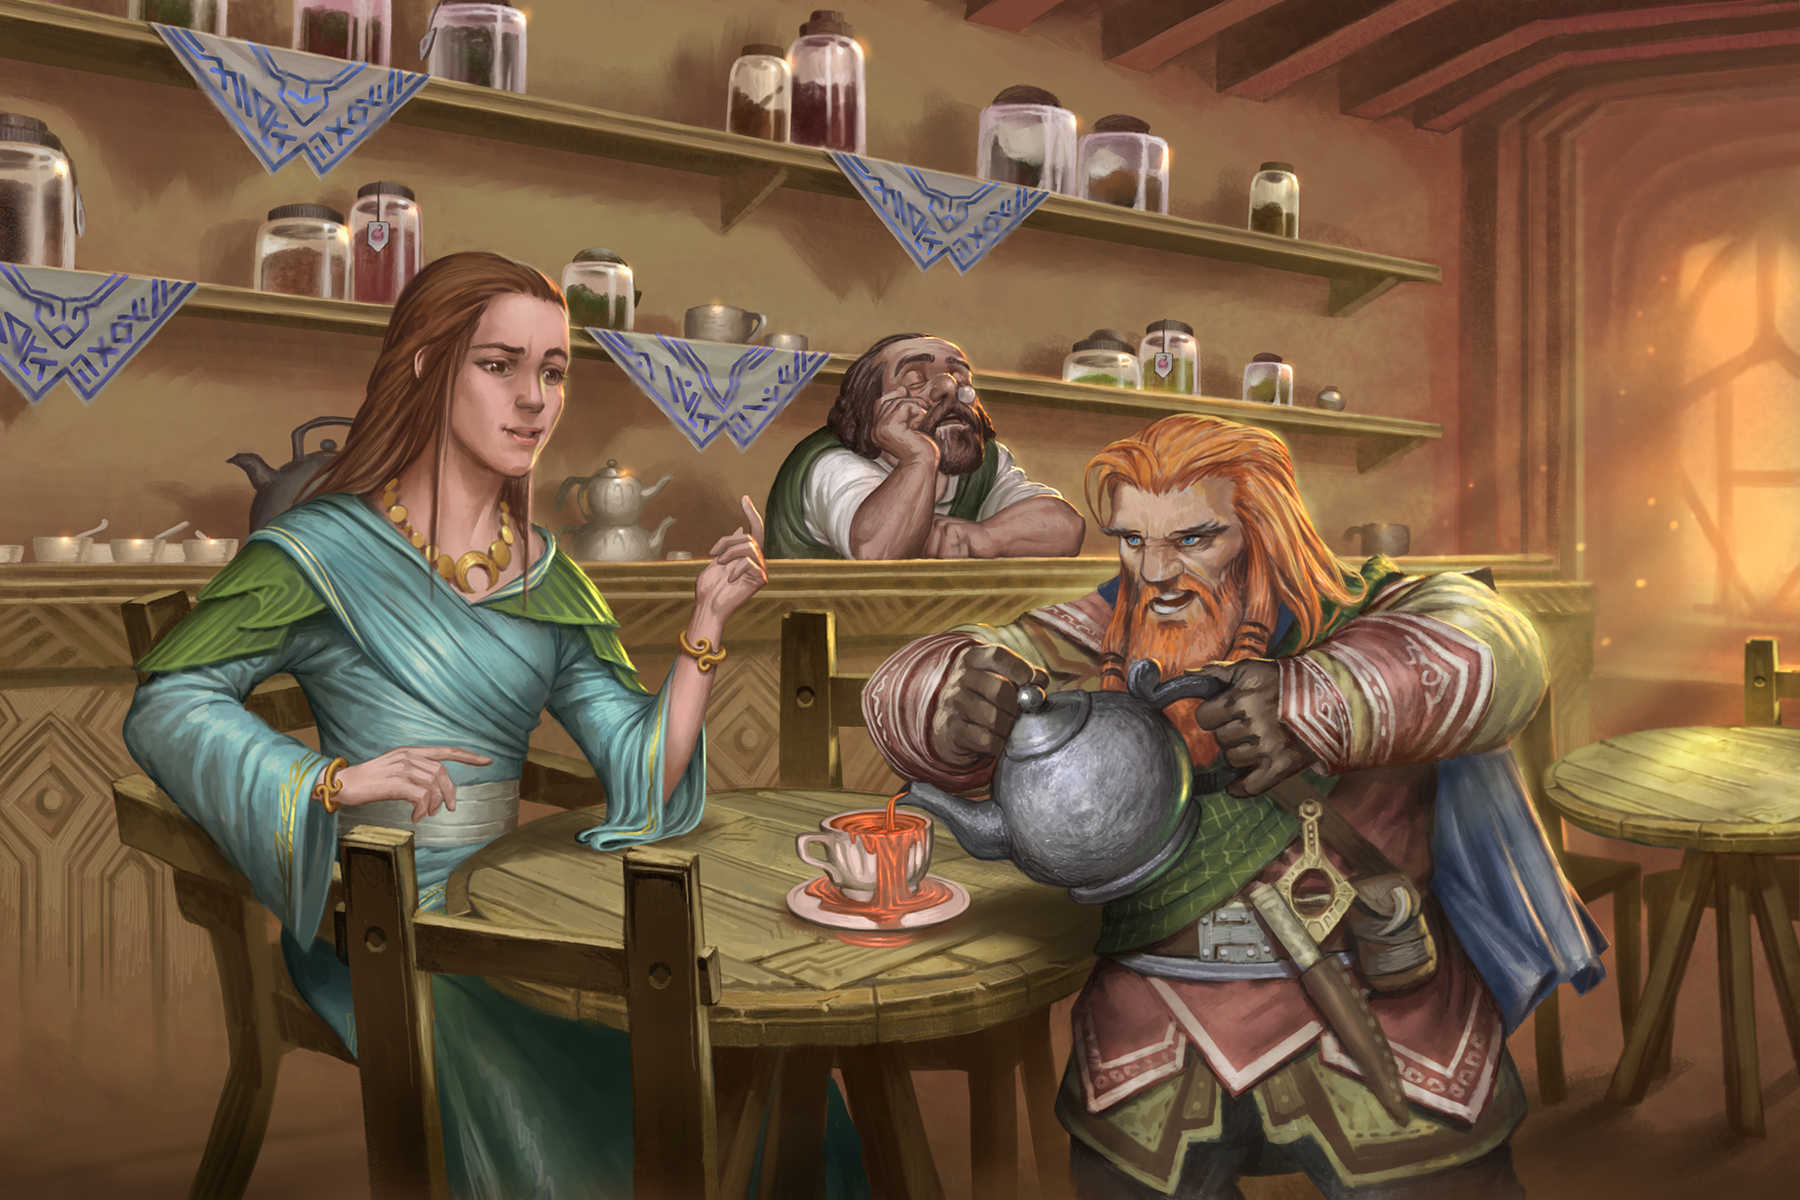 Harsk pours tea for a companion at a tea house.